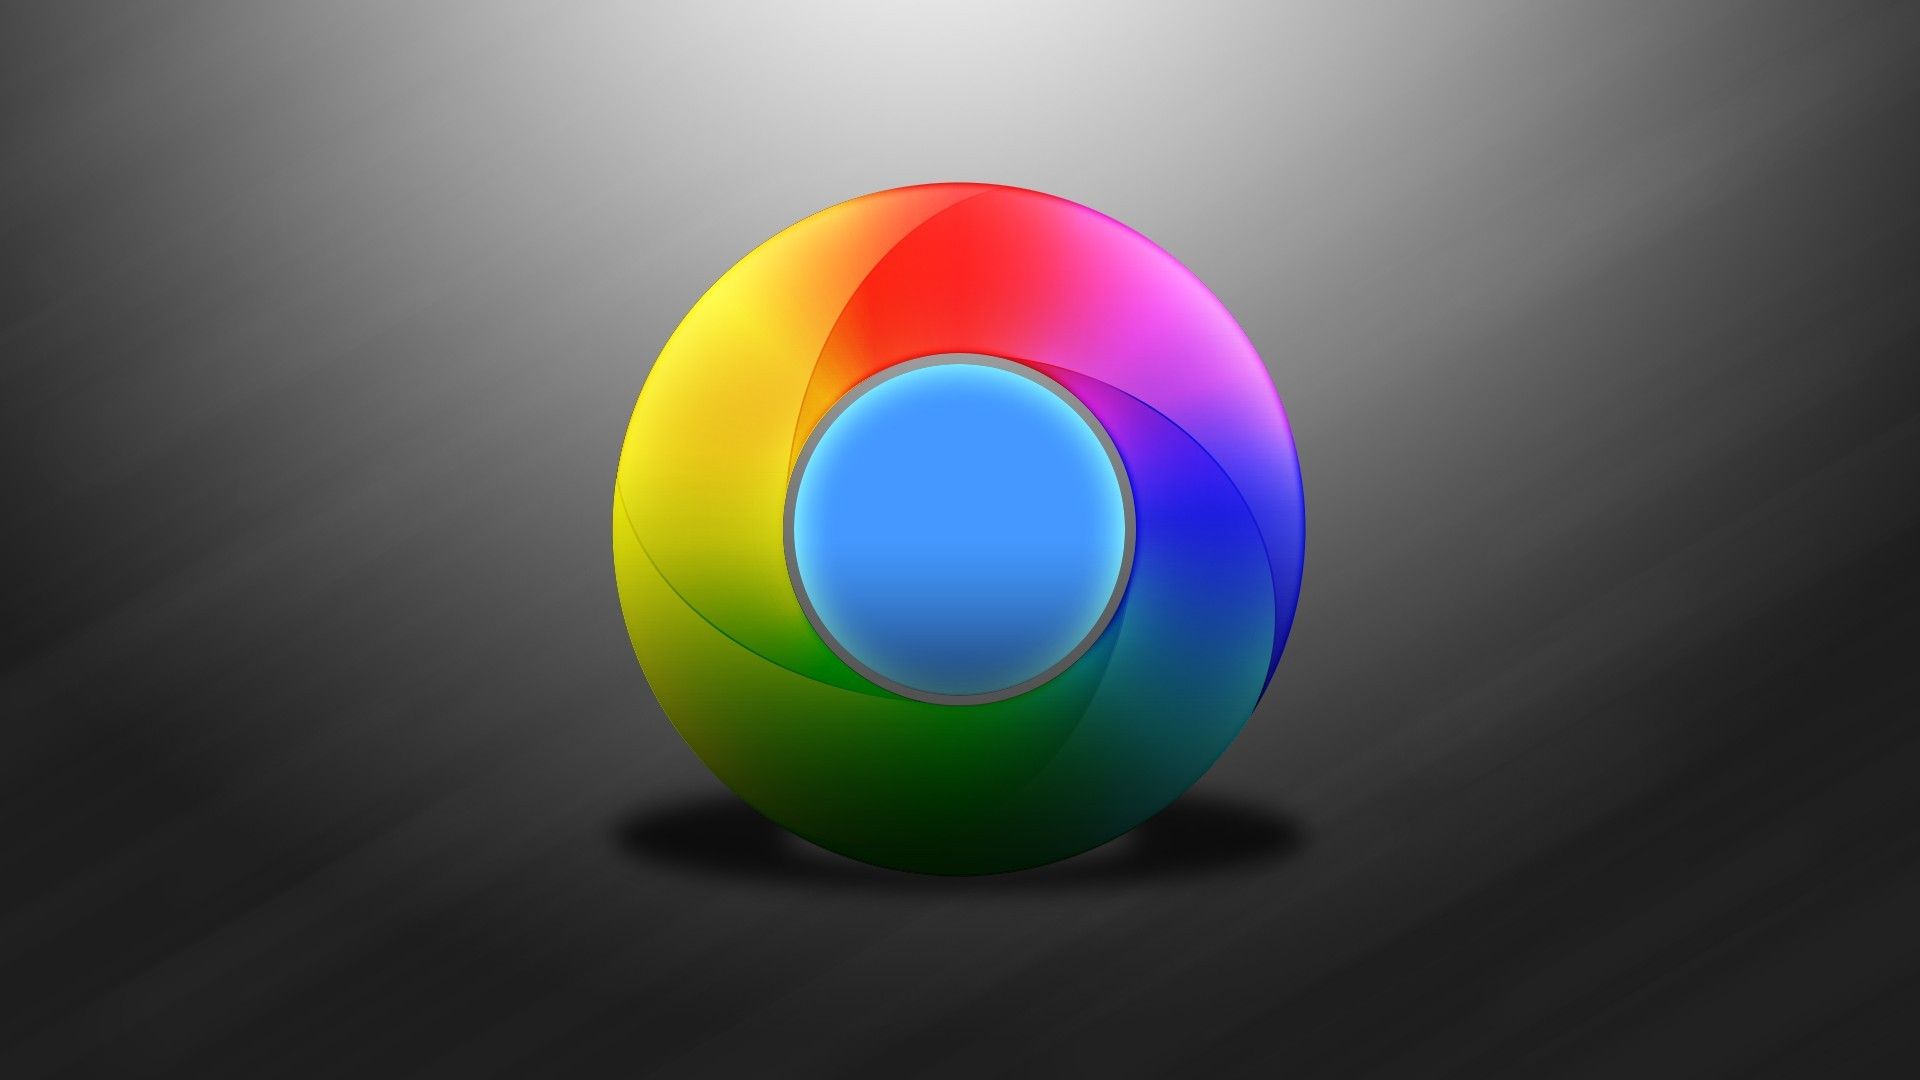 chrome wallpaper hd,colorfulness,sphere,circle,ball,logo